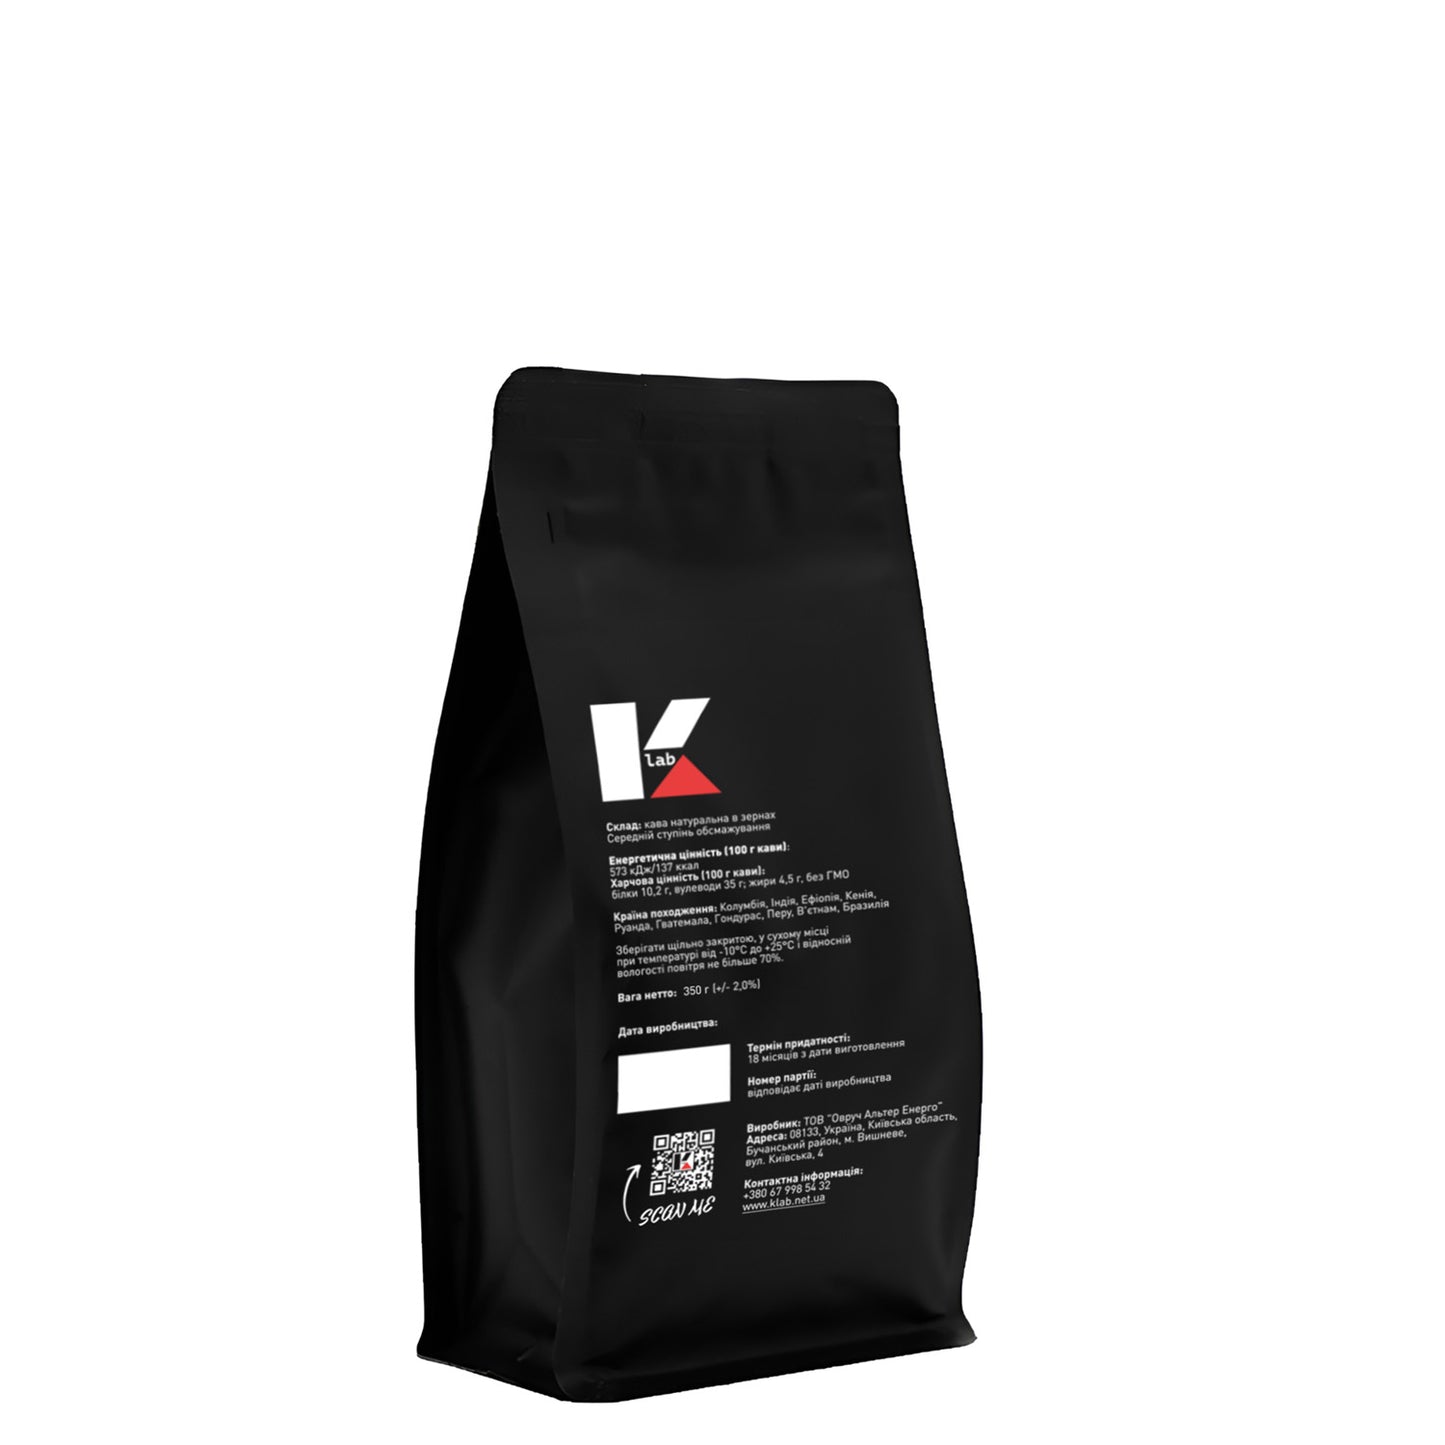 COFFEE STORY №3 - Klab (0.35kg back)